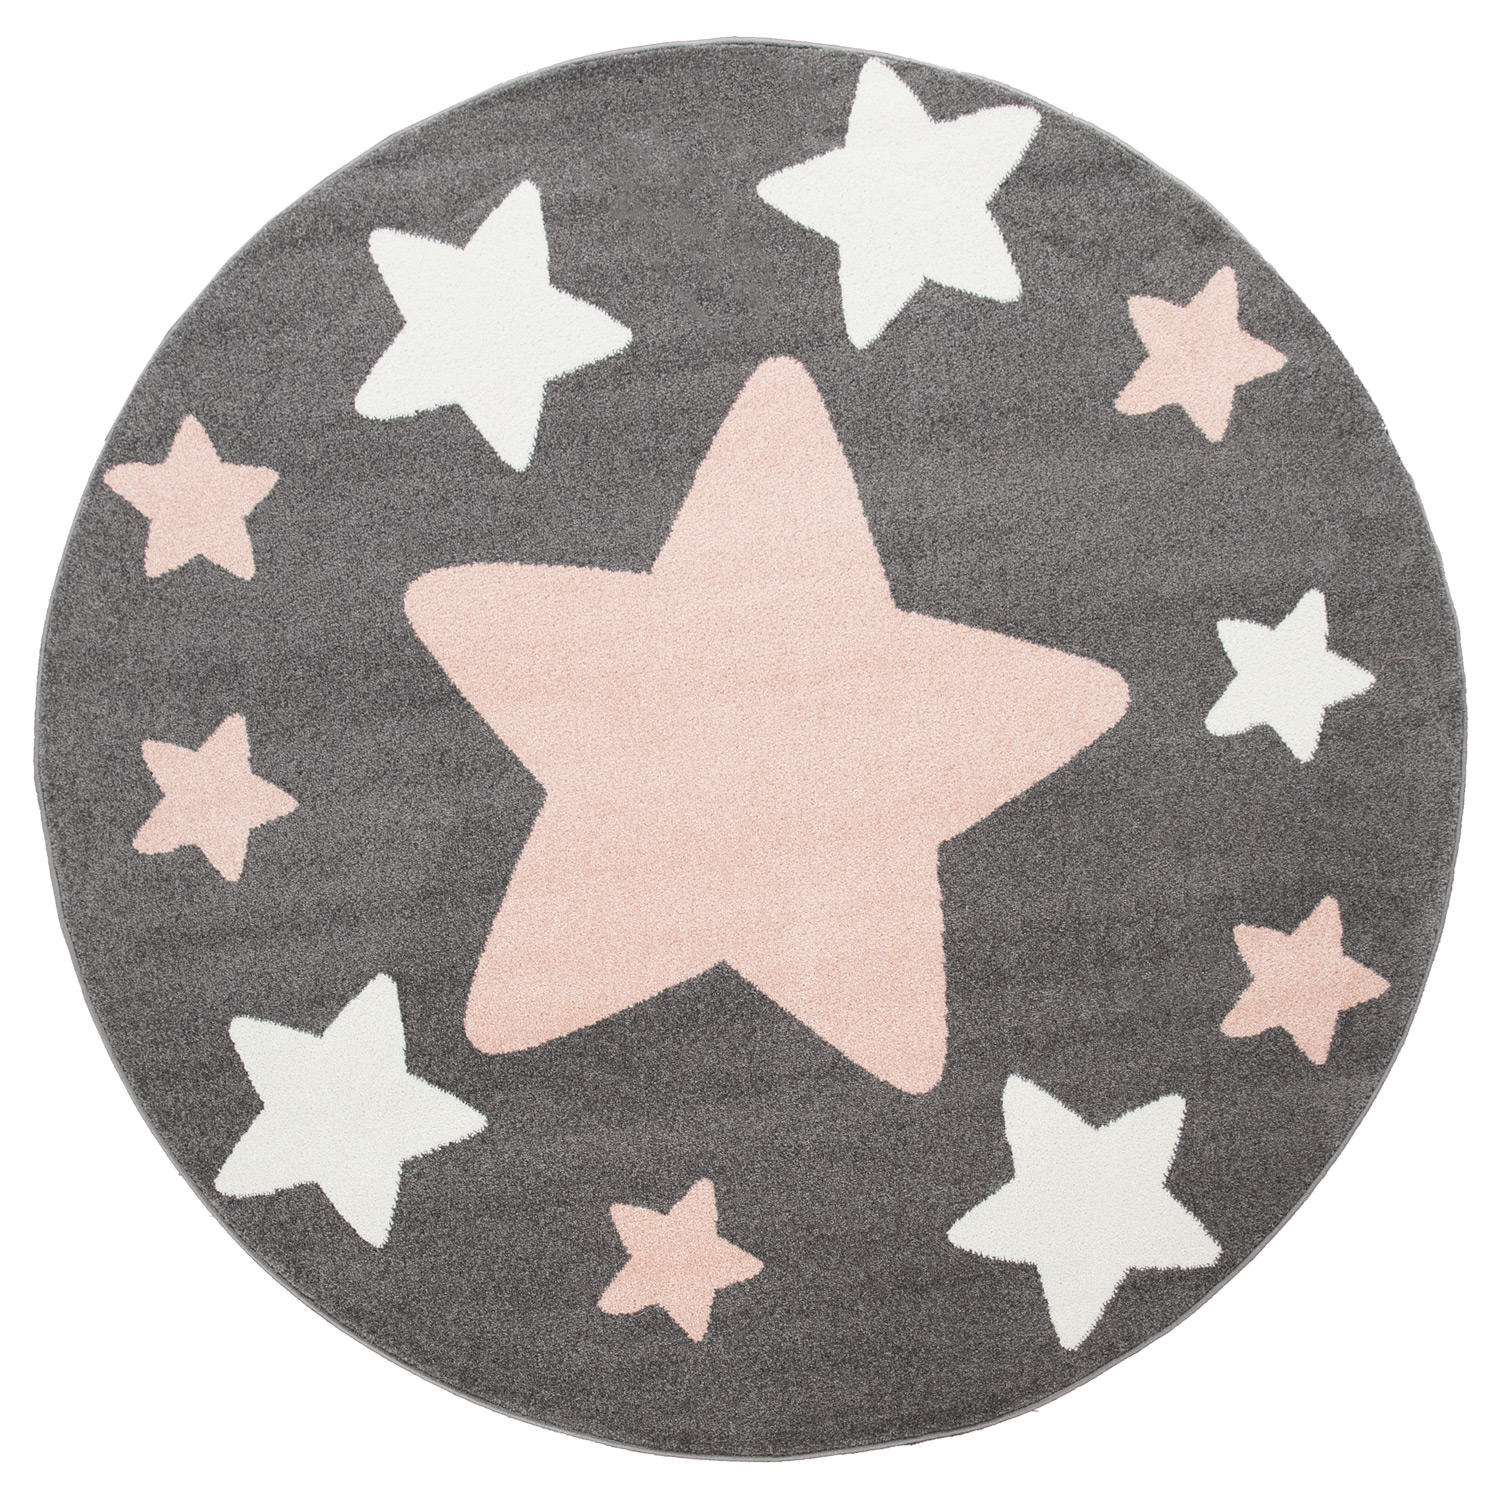 Kinderteppich Kinderzimmer Sterne Kurzflor Grau 